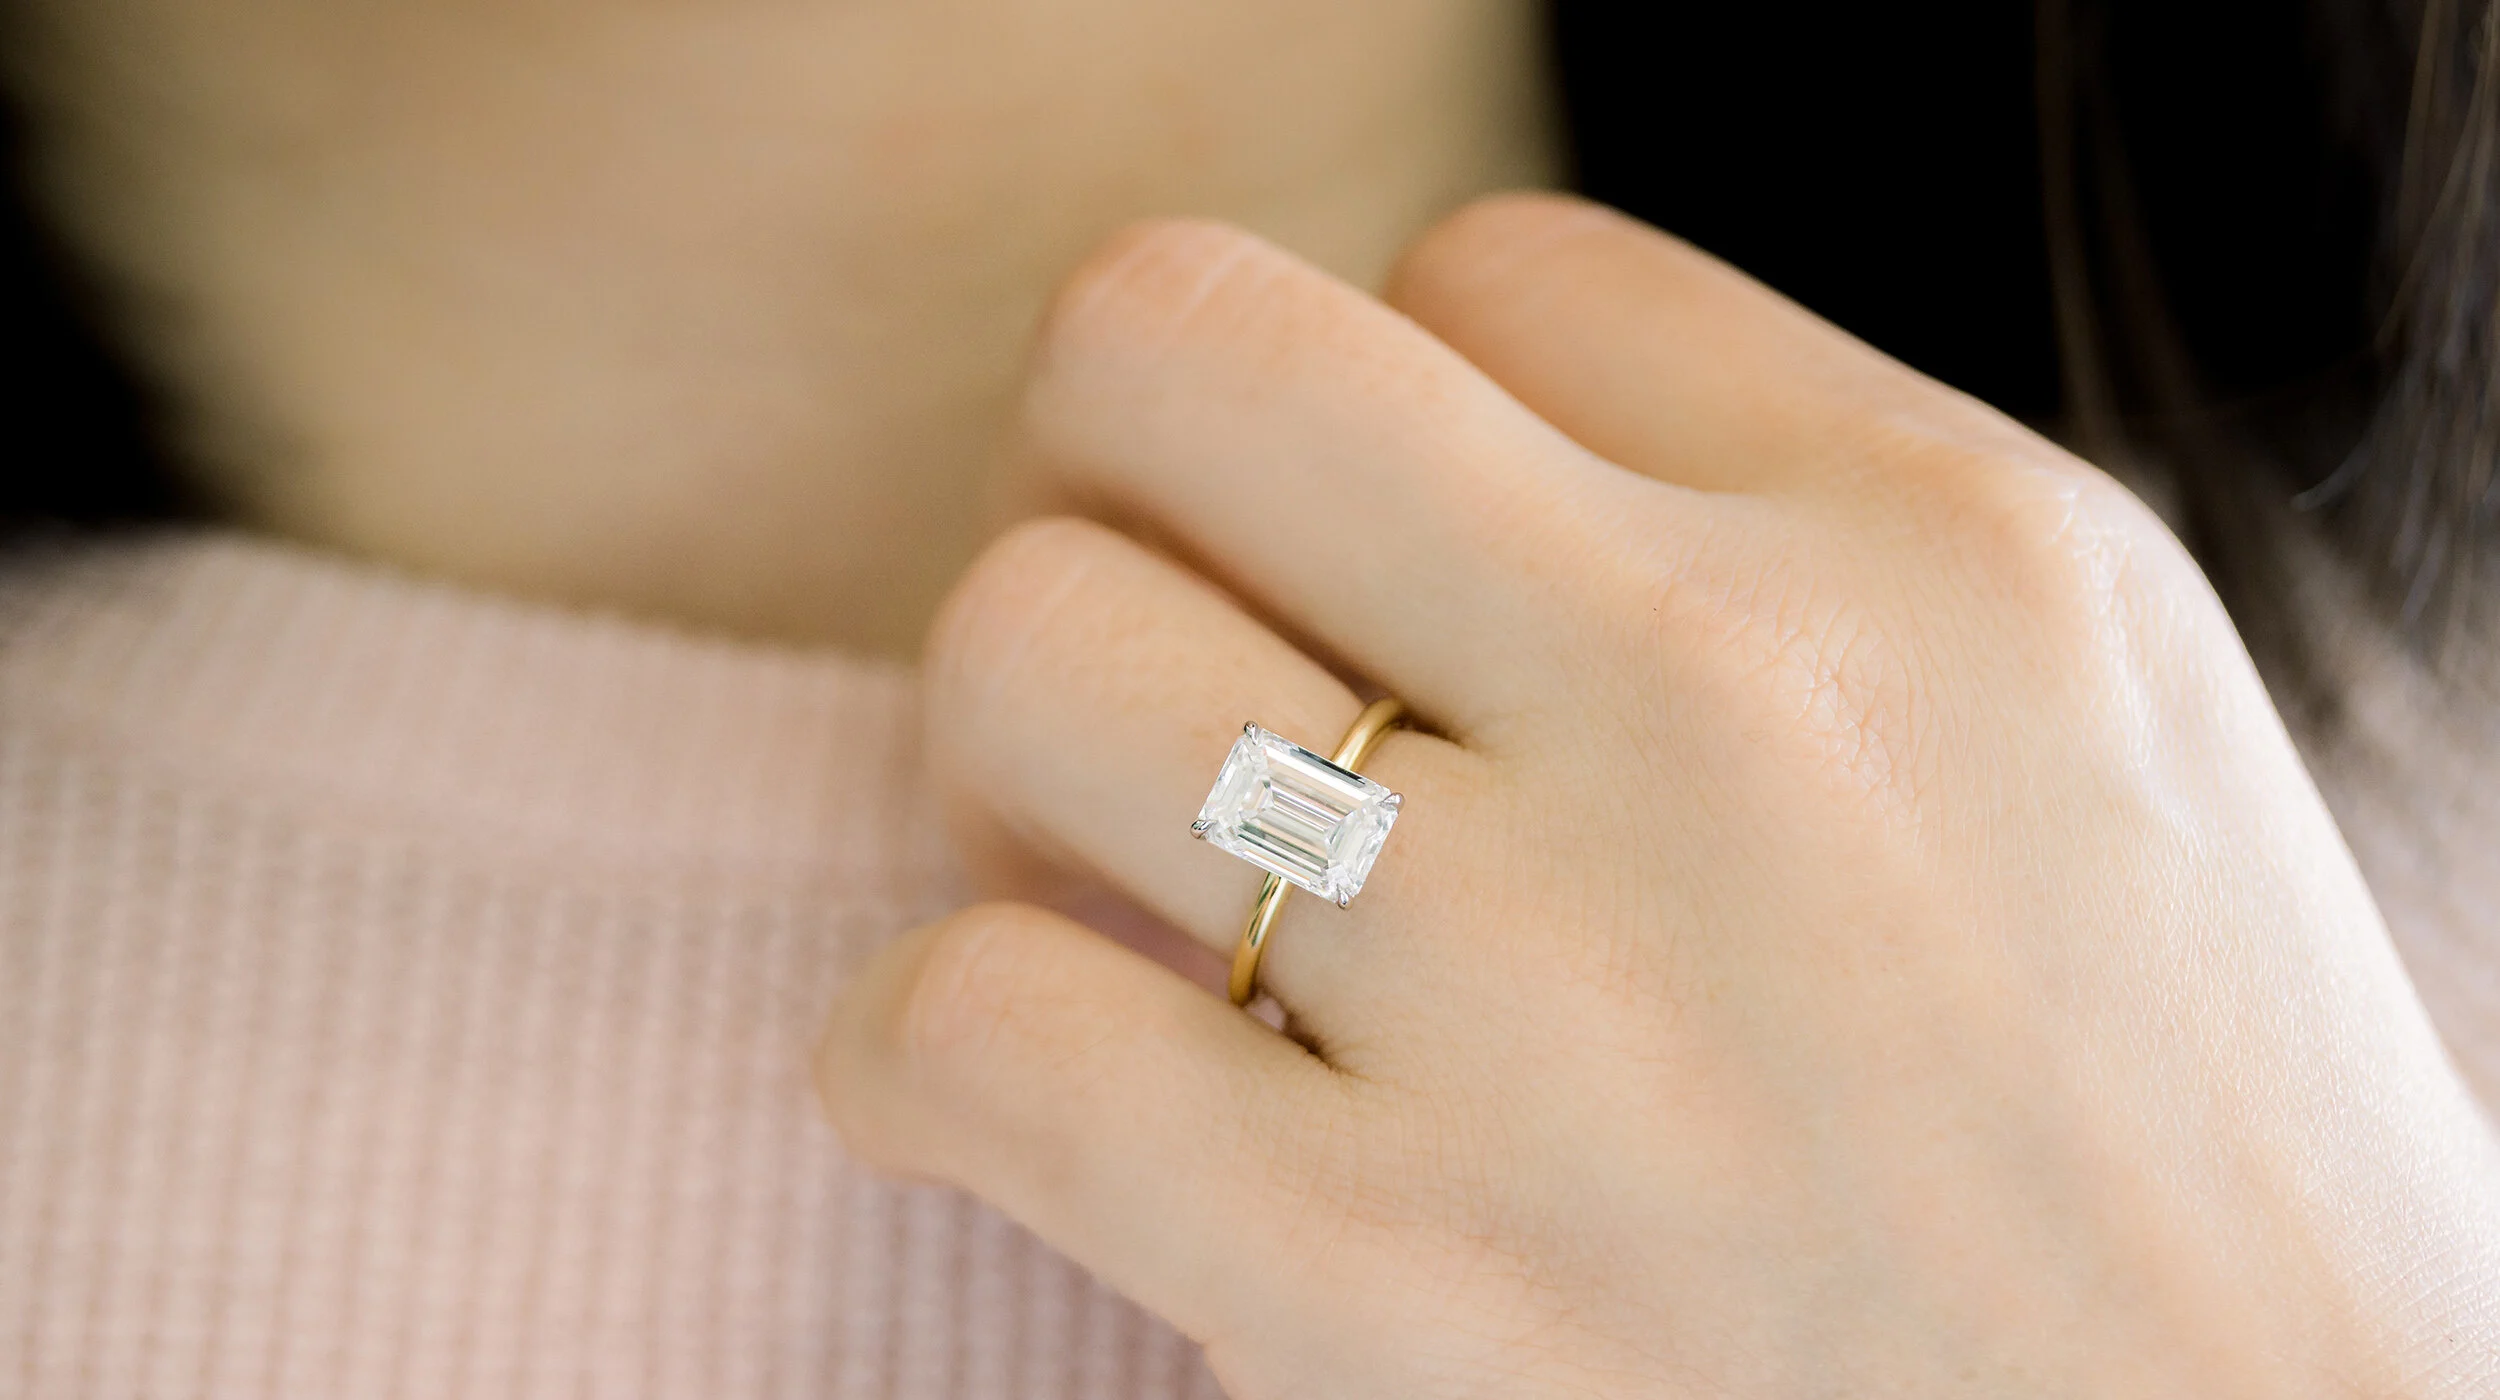 4 carat lab created diamond engagement ring set in 18k yellow gold